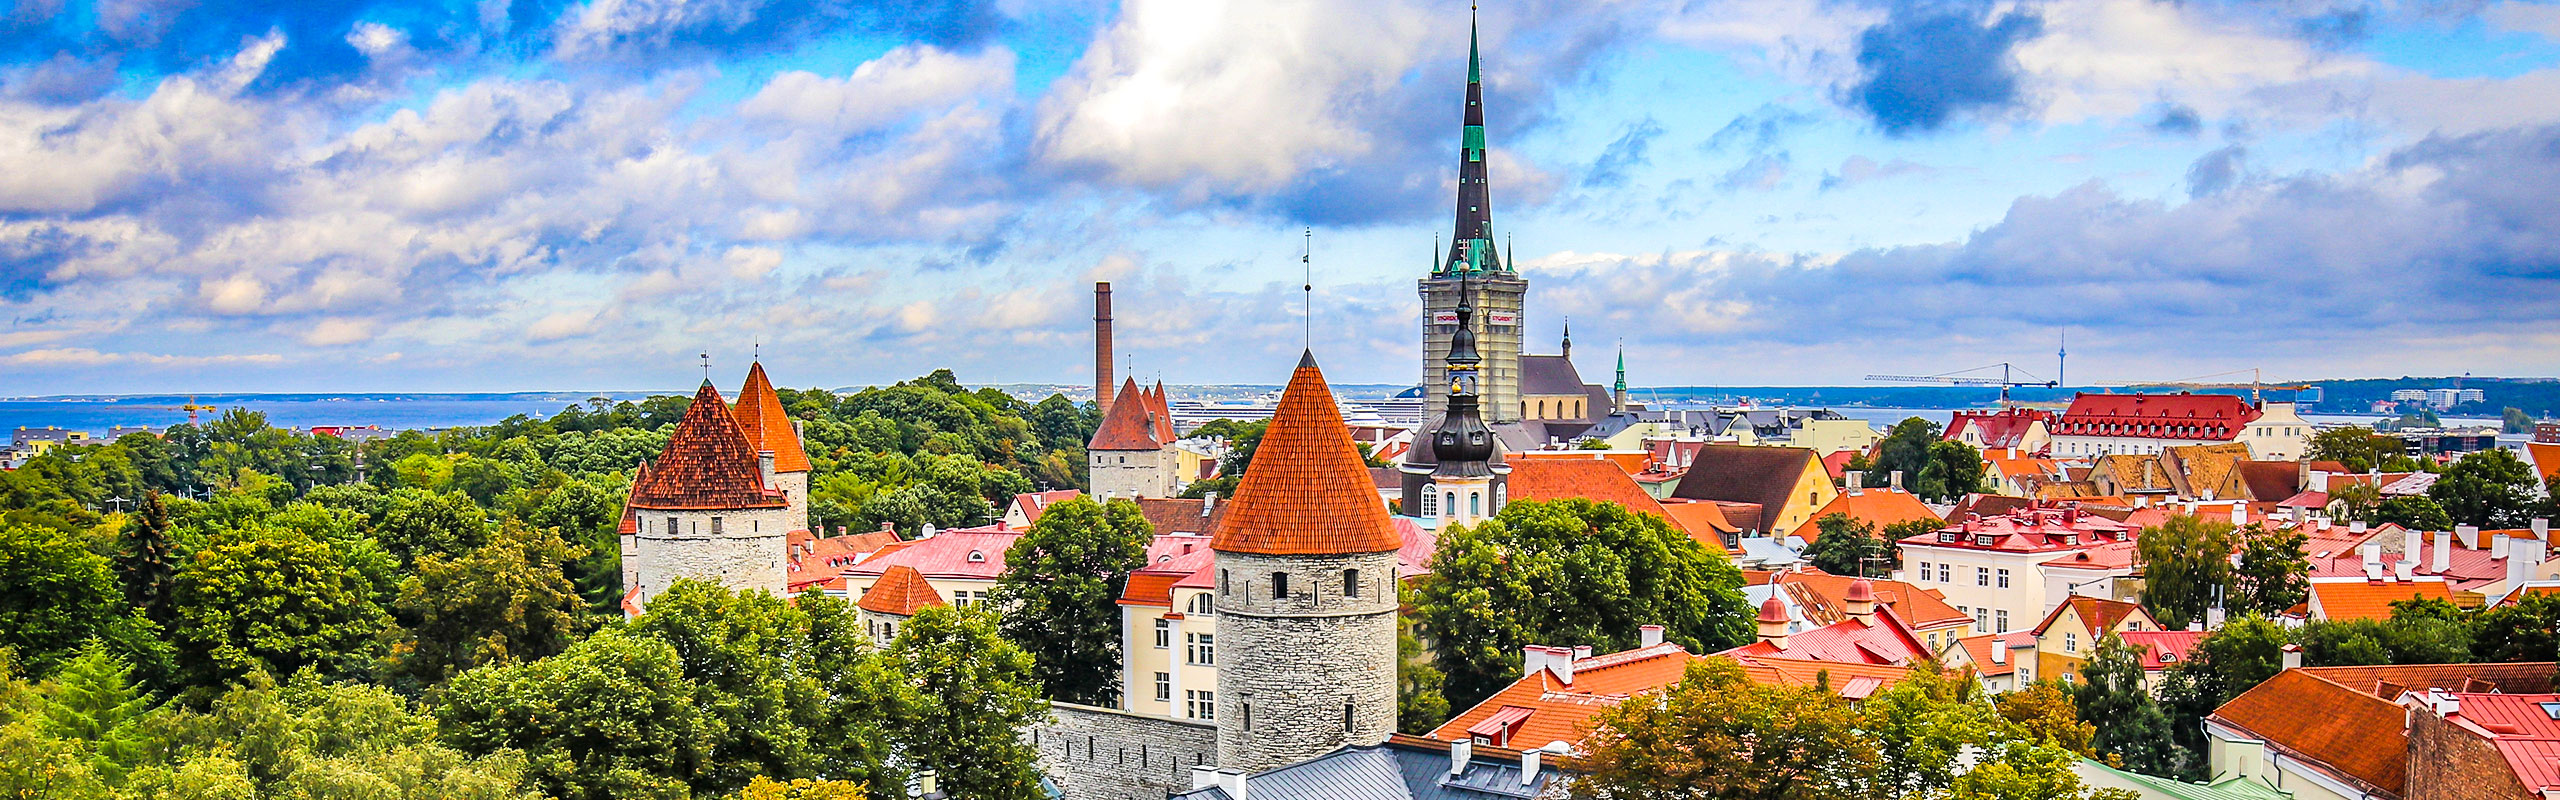 Tallin, Capital of Estonia